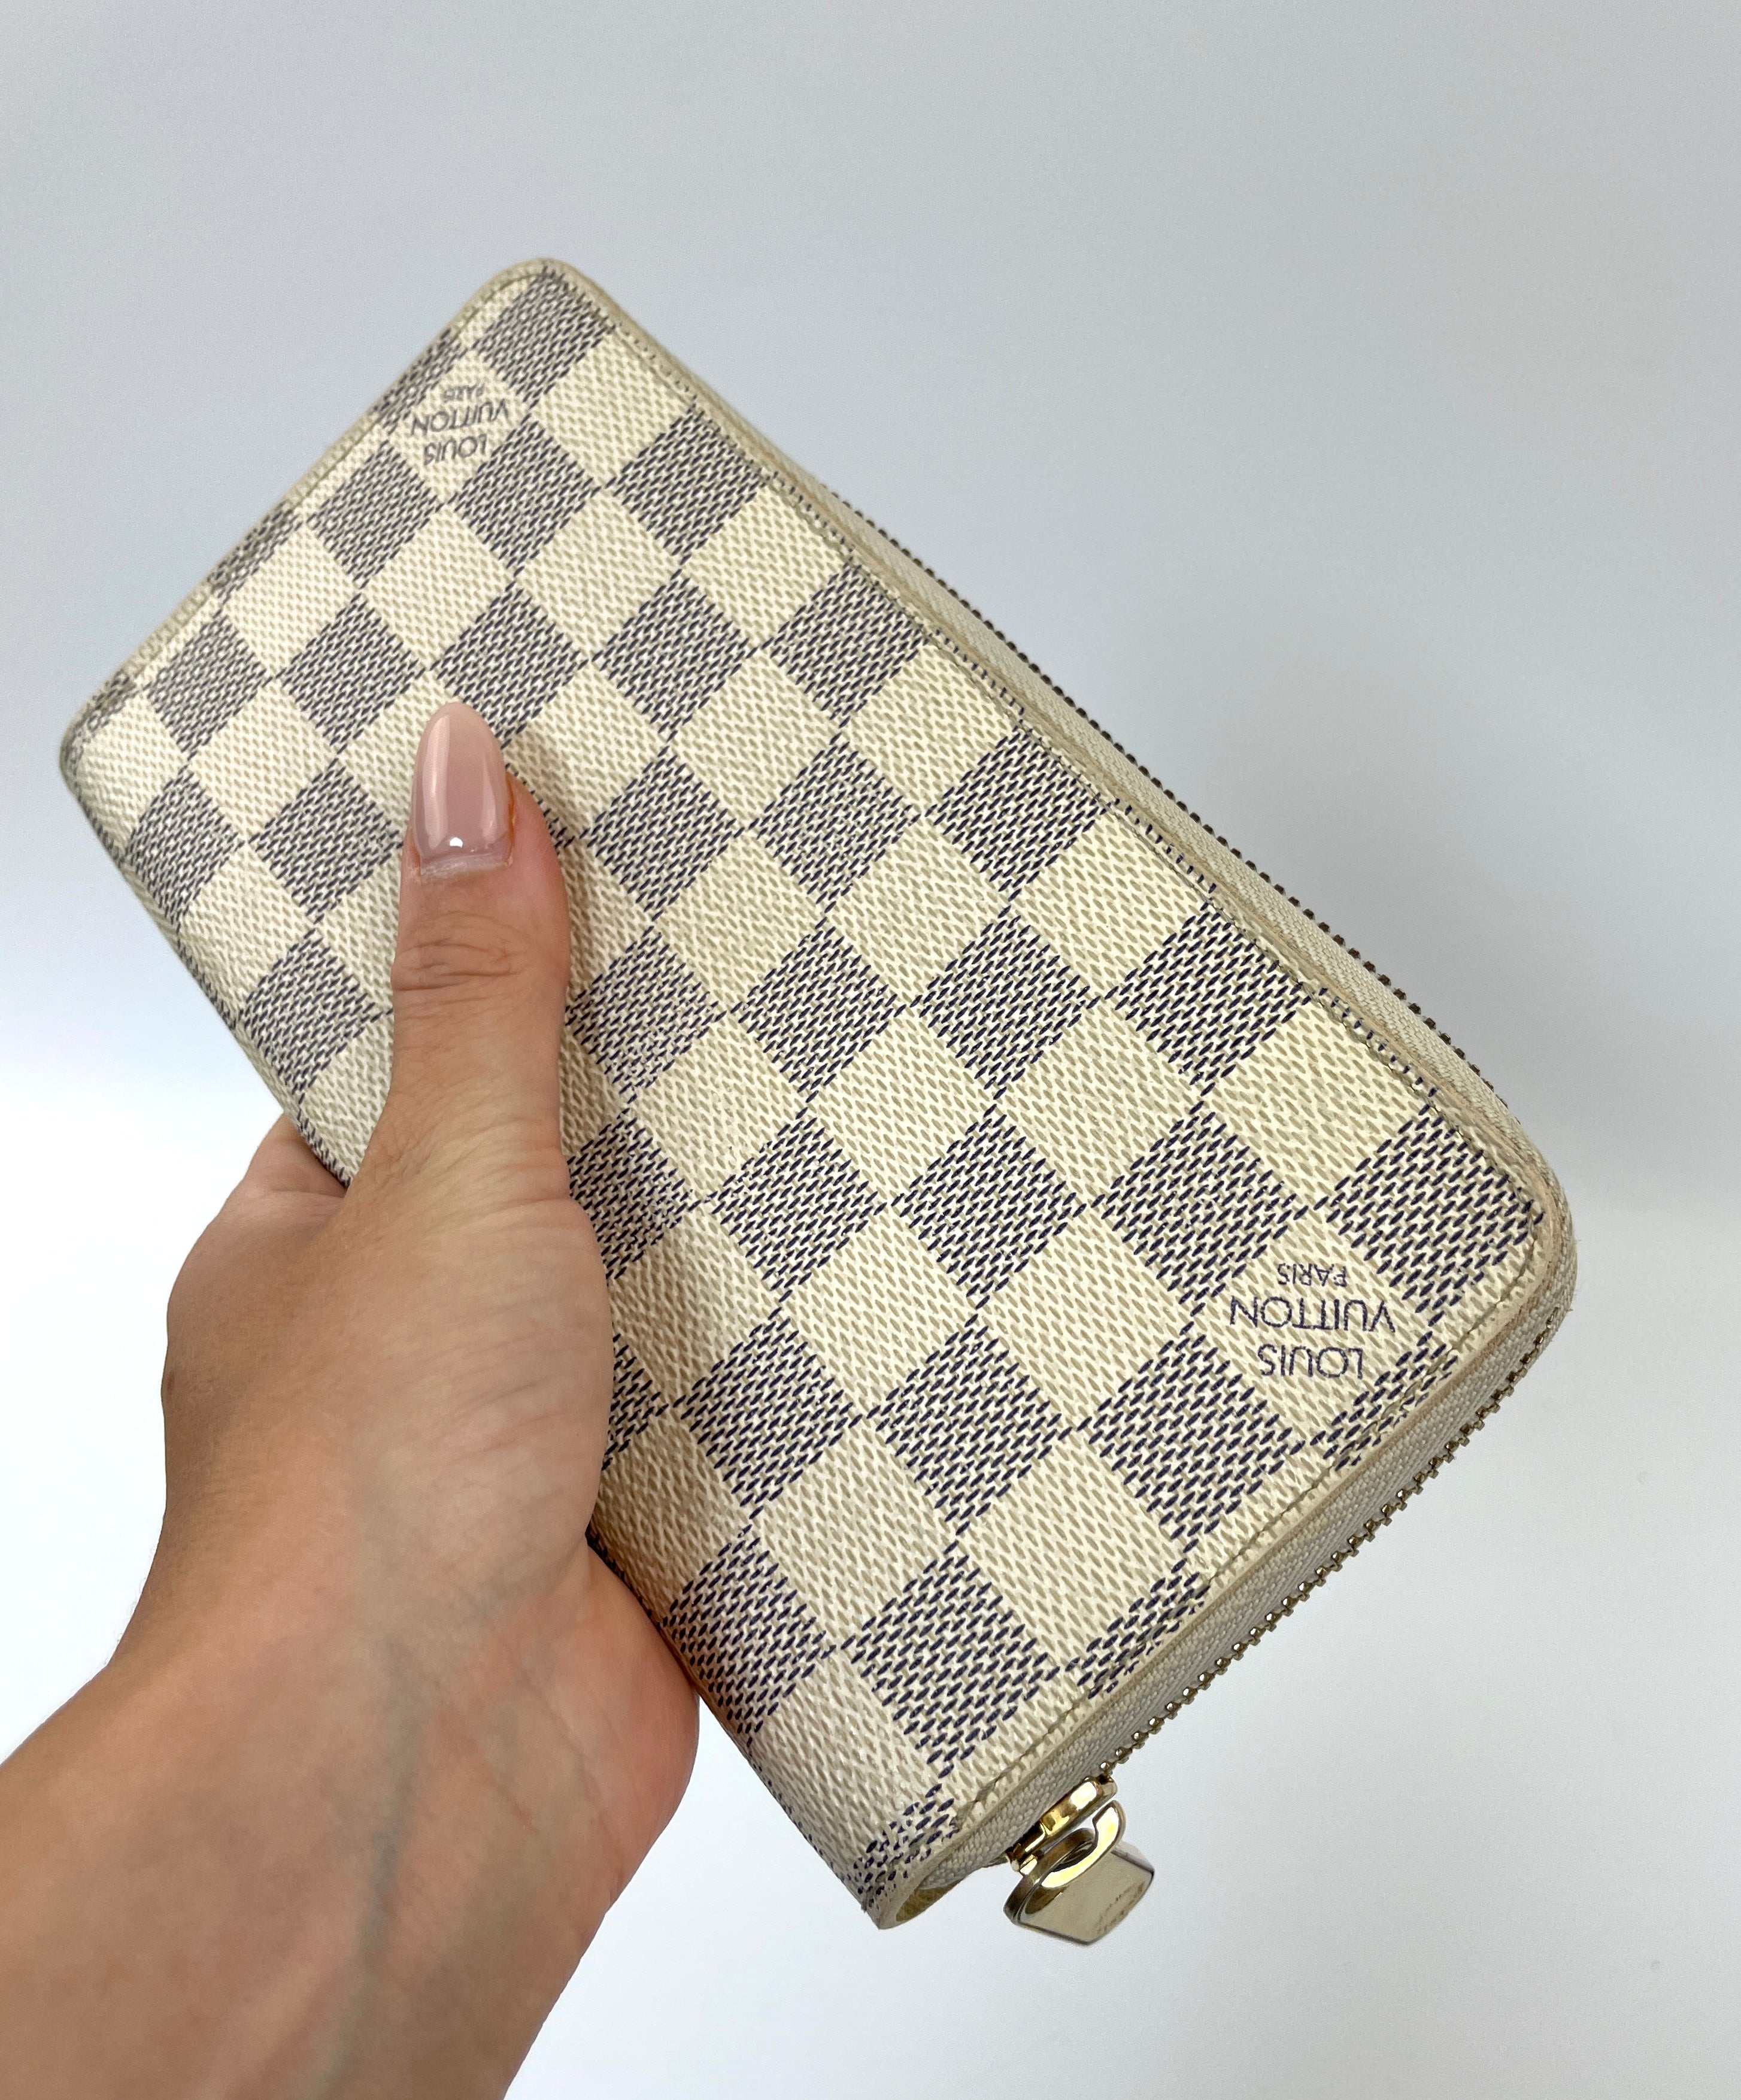 Louis Vuitton Zippy Wallet Damier Azur Used (5711)